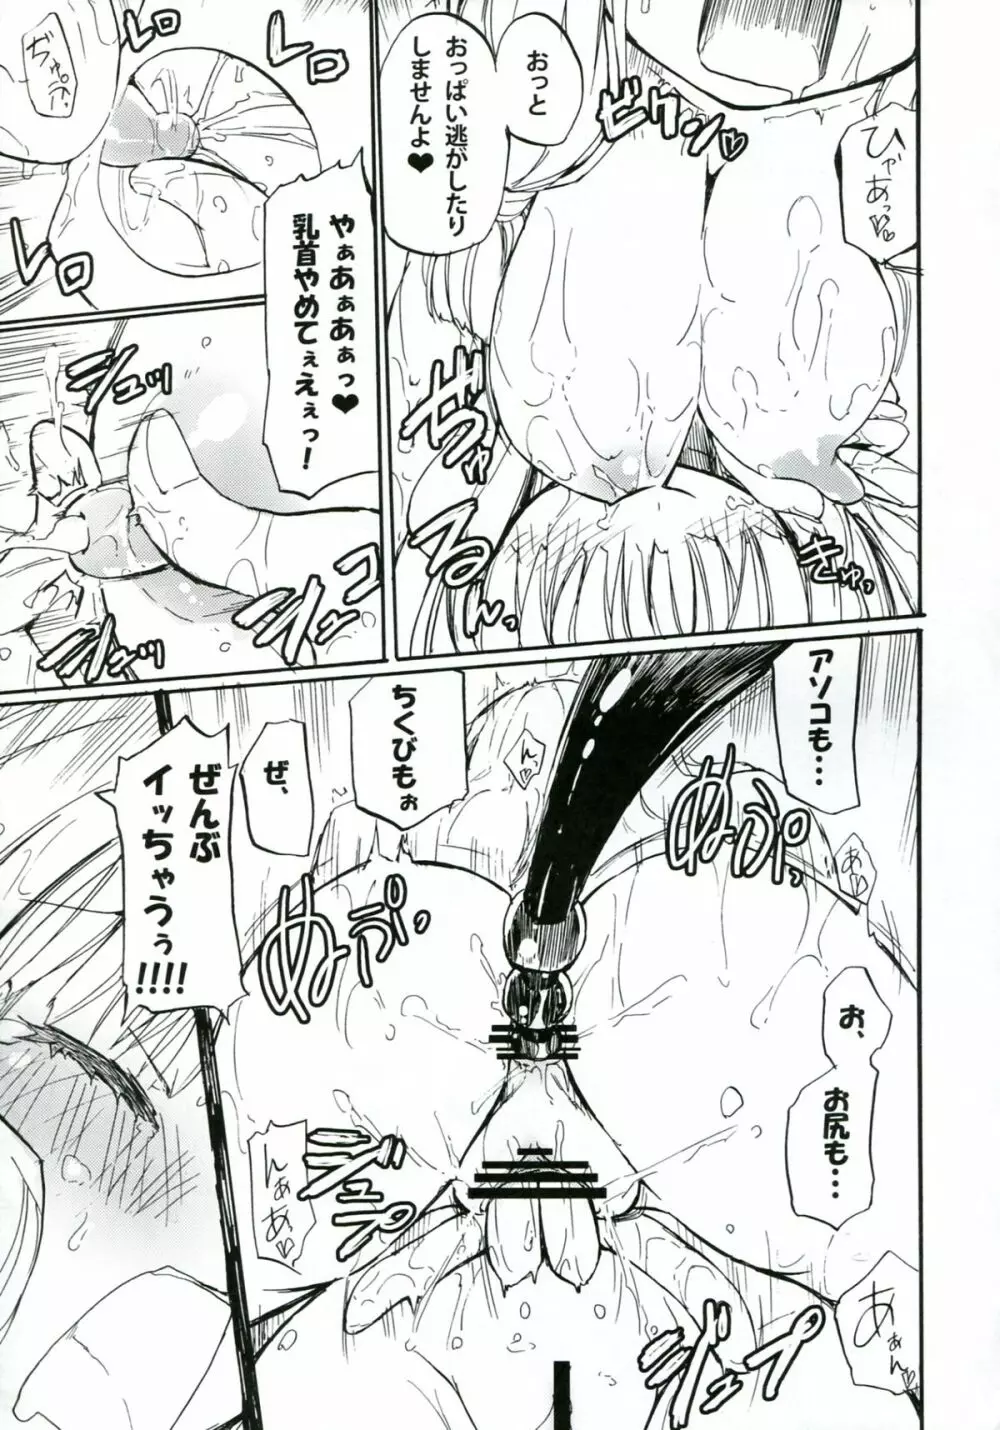 Homuraya Milk ★ Collection 2 65ページ